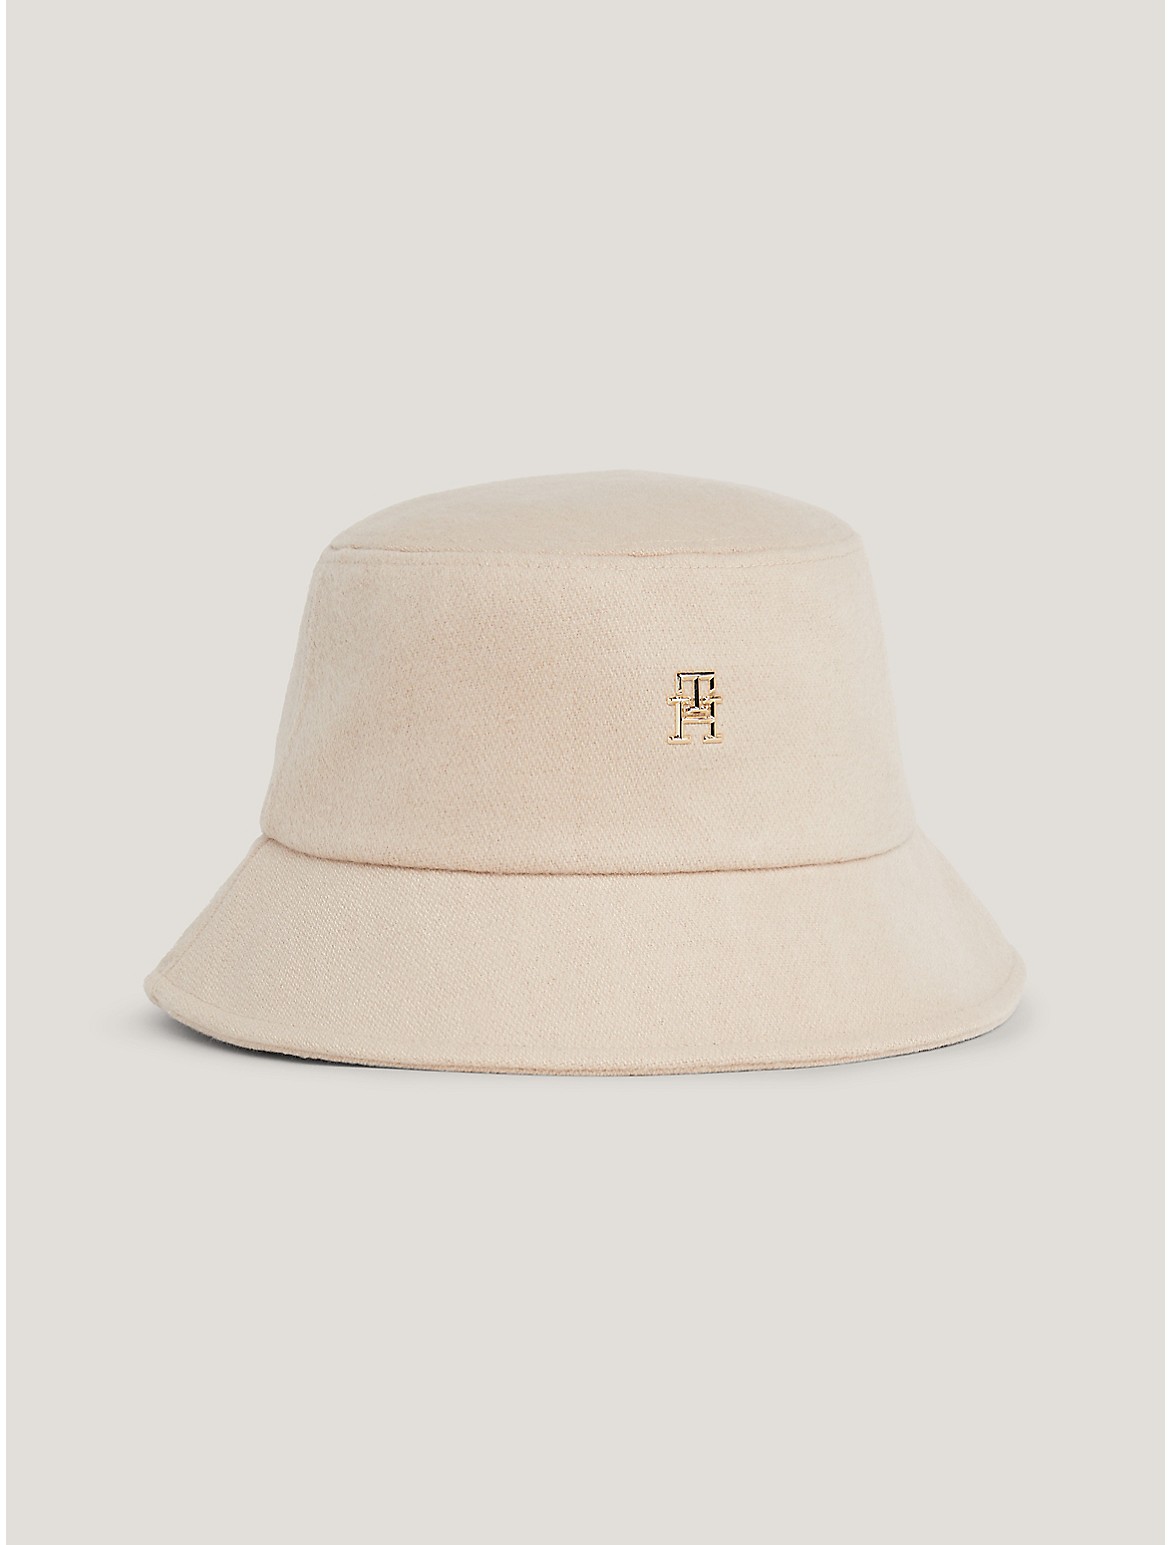 Tommy Hilfiger Women's Gold TH Logo Bucket Hat - Beige